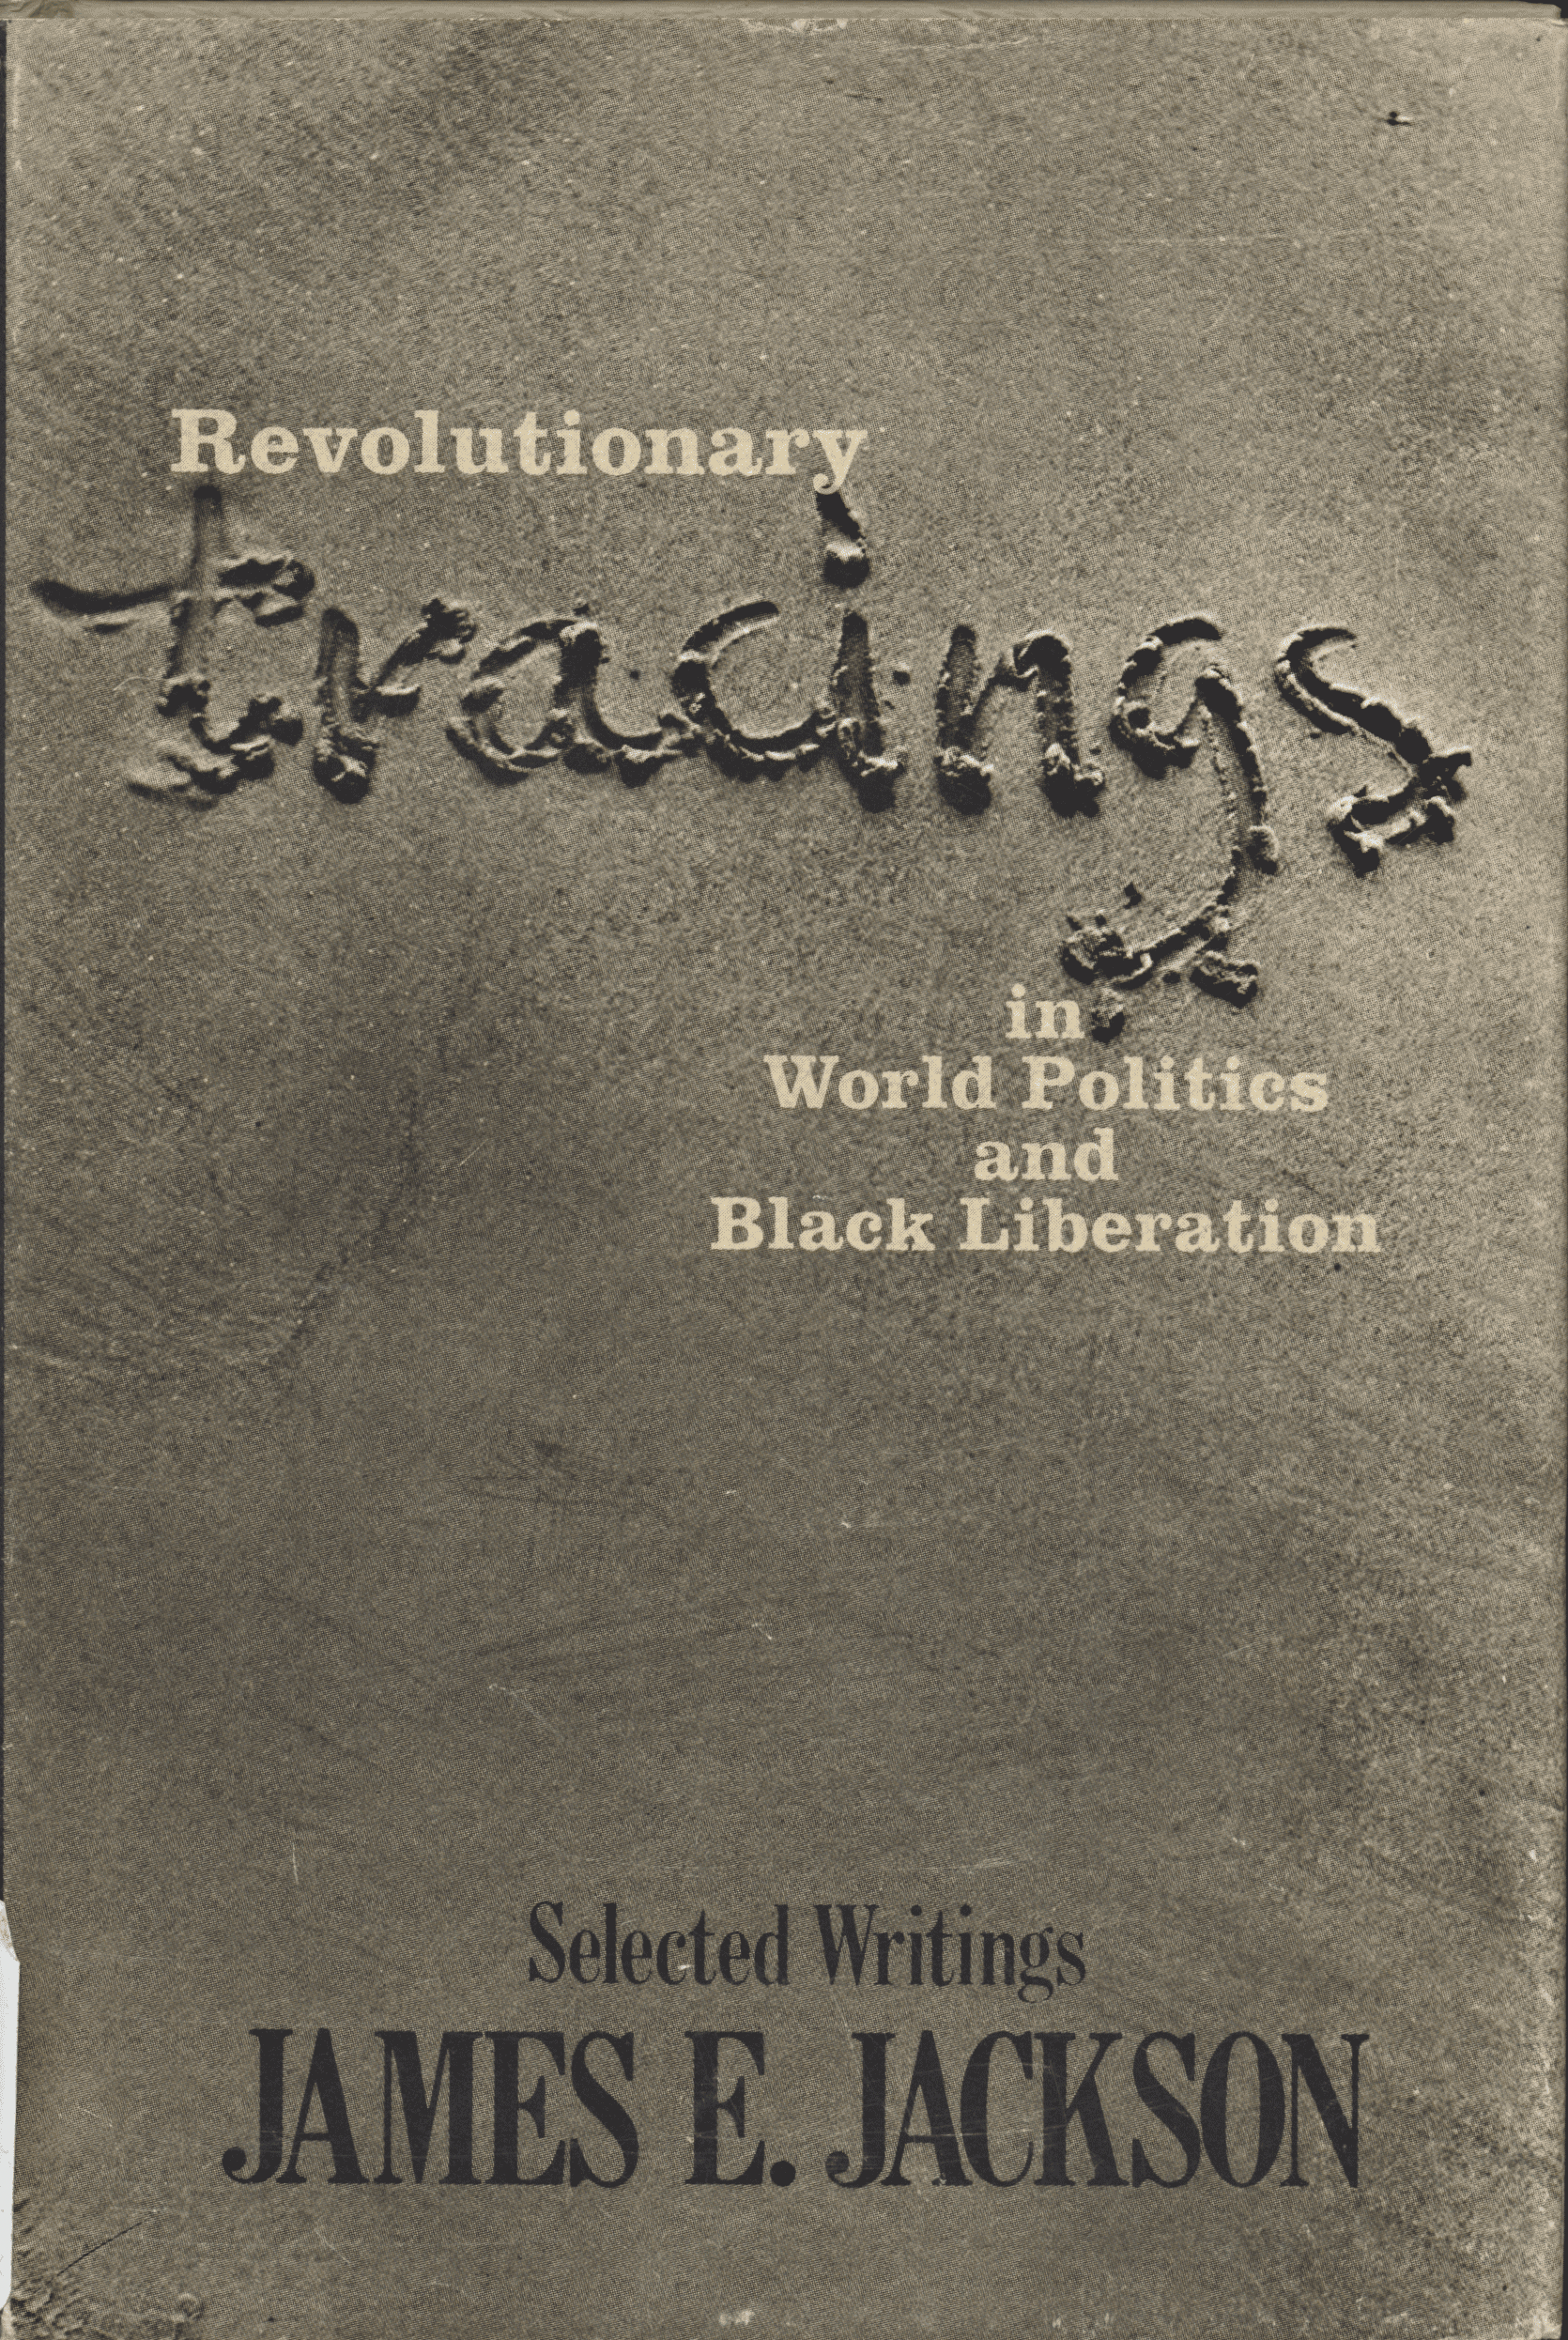 cover of Revolutionary Tracings by James E. Jackson